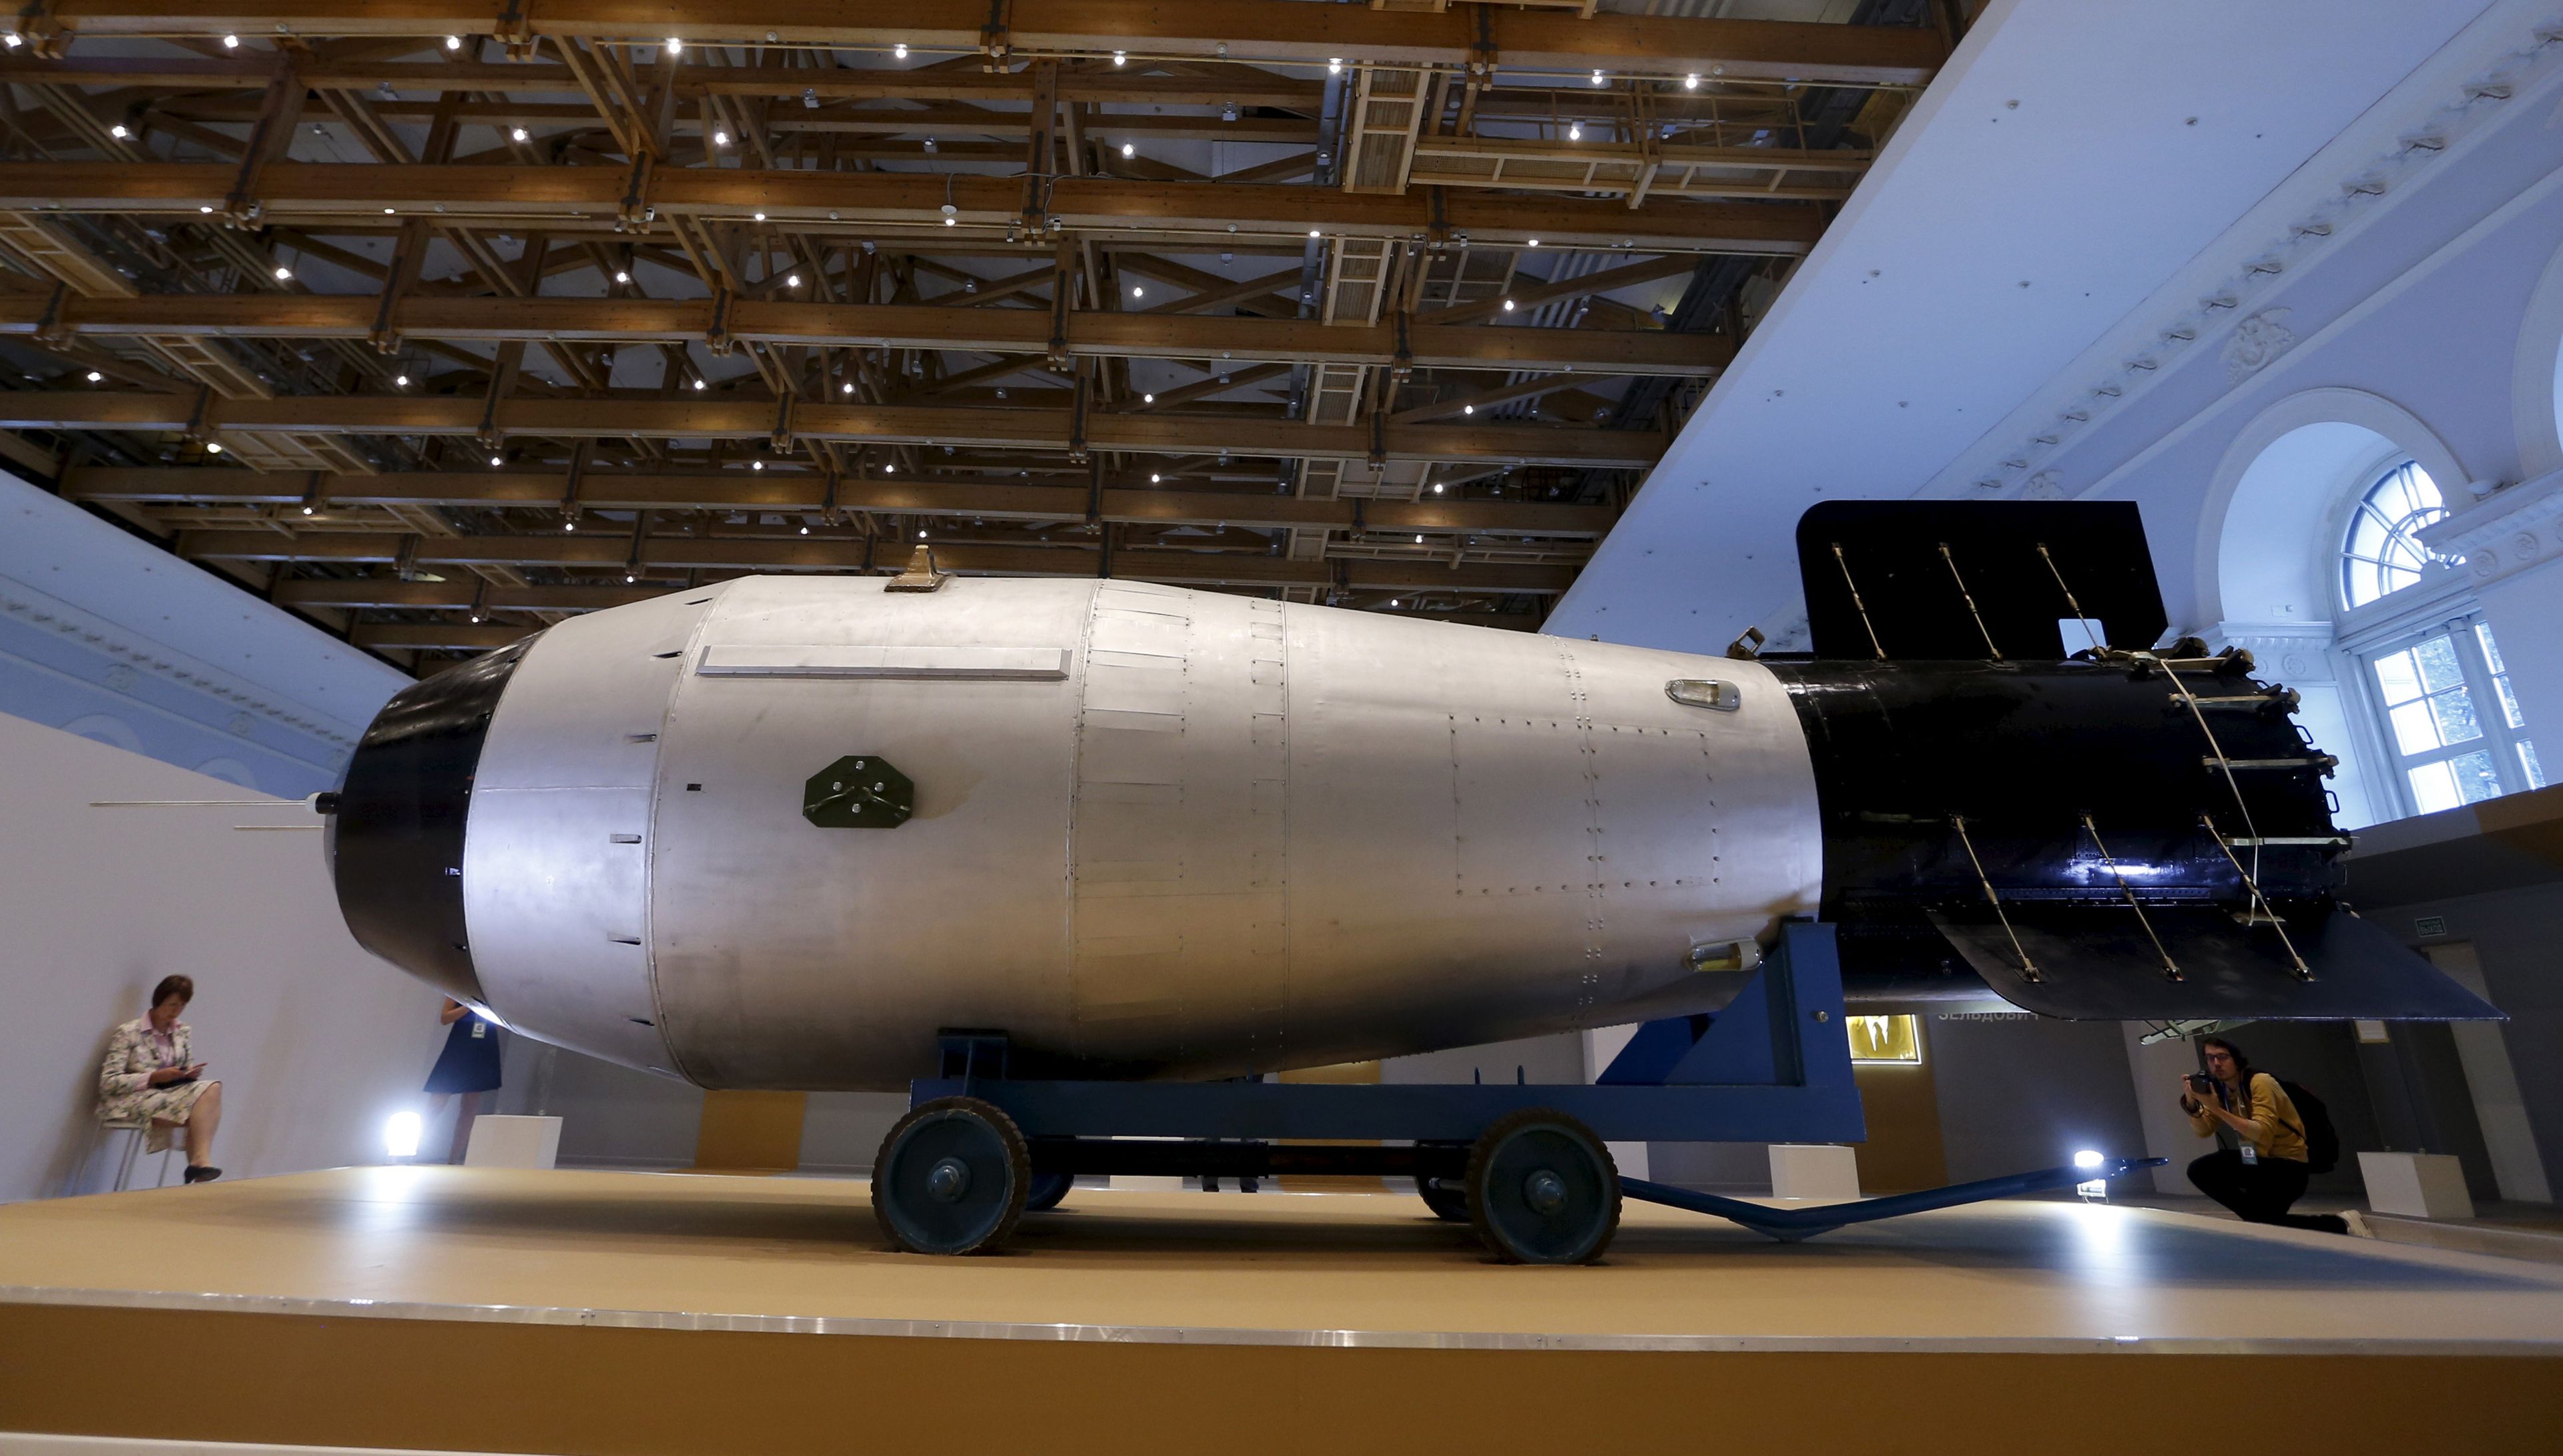 Shell, réplica de la mayor bomba nuclear soviética detonada AN-602, exhibida en Moscú (2015).